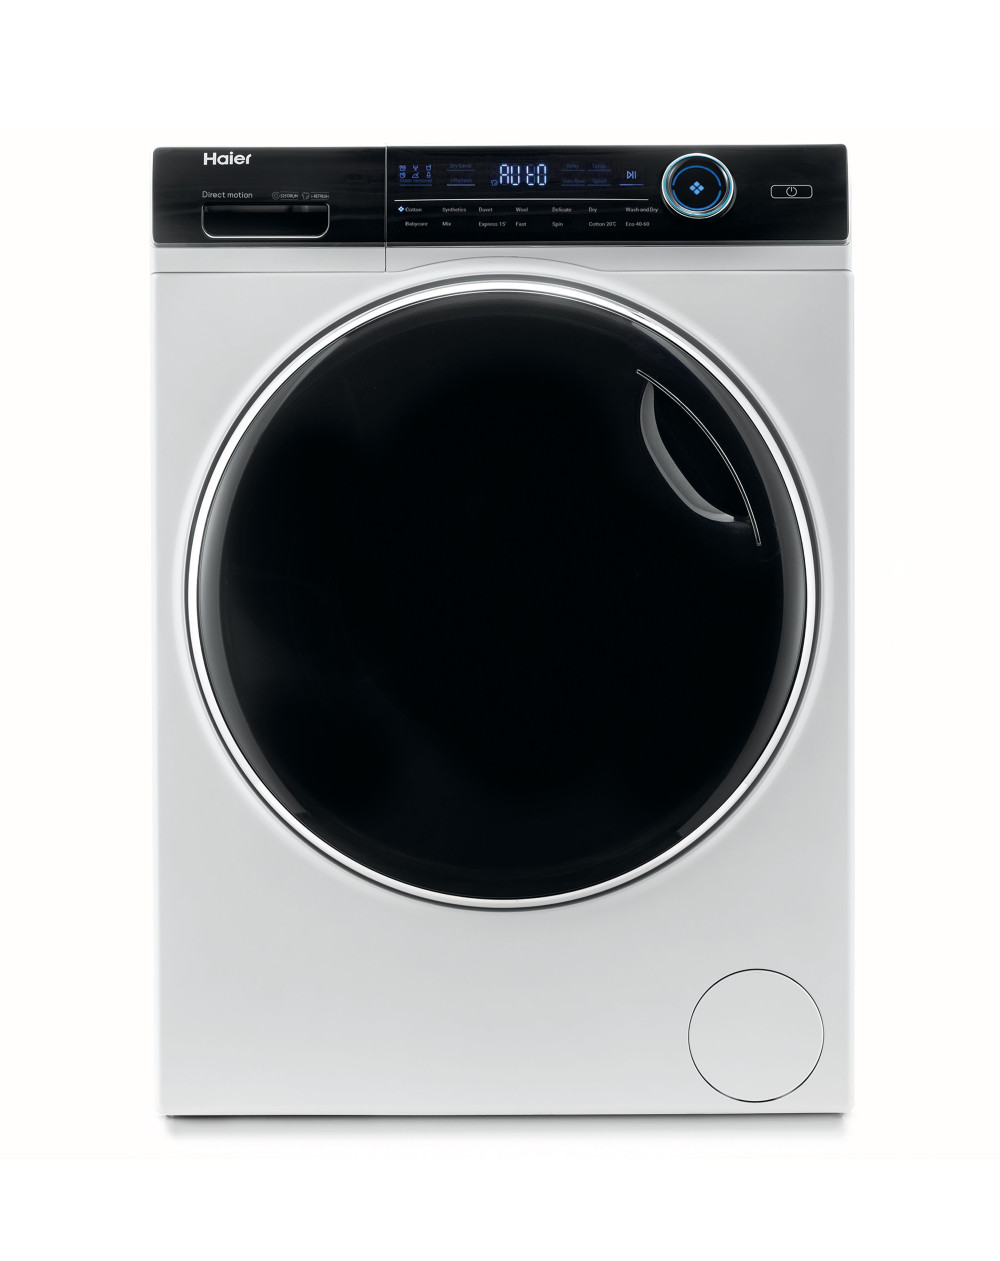 Haier HW120-B14979 Freestanding Washing Machine featured image